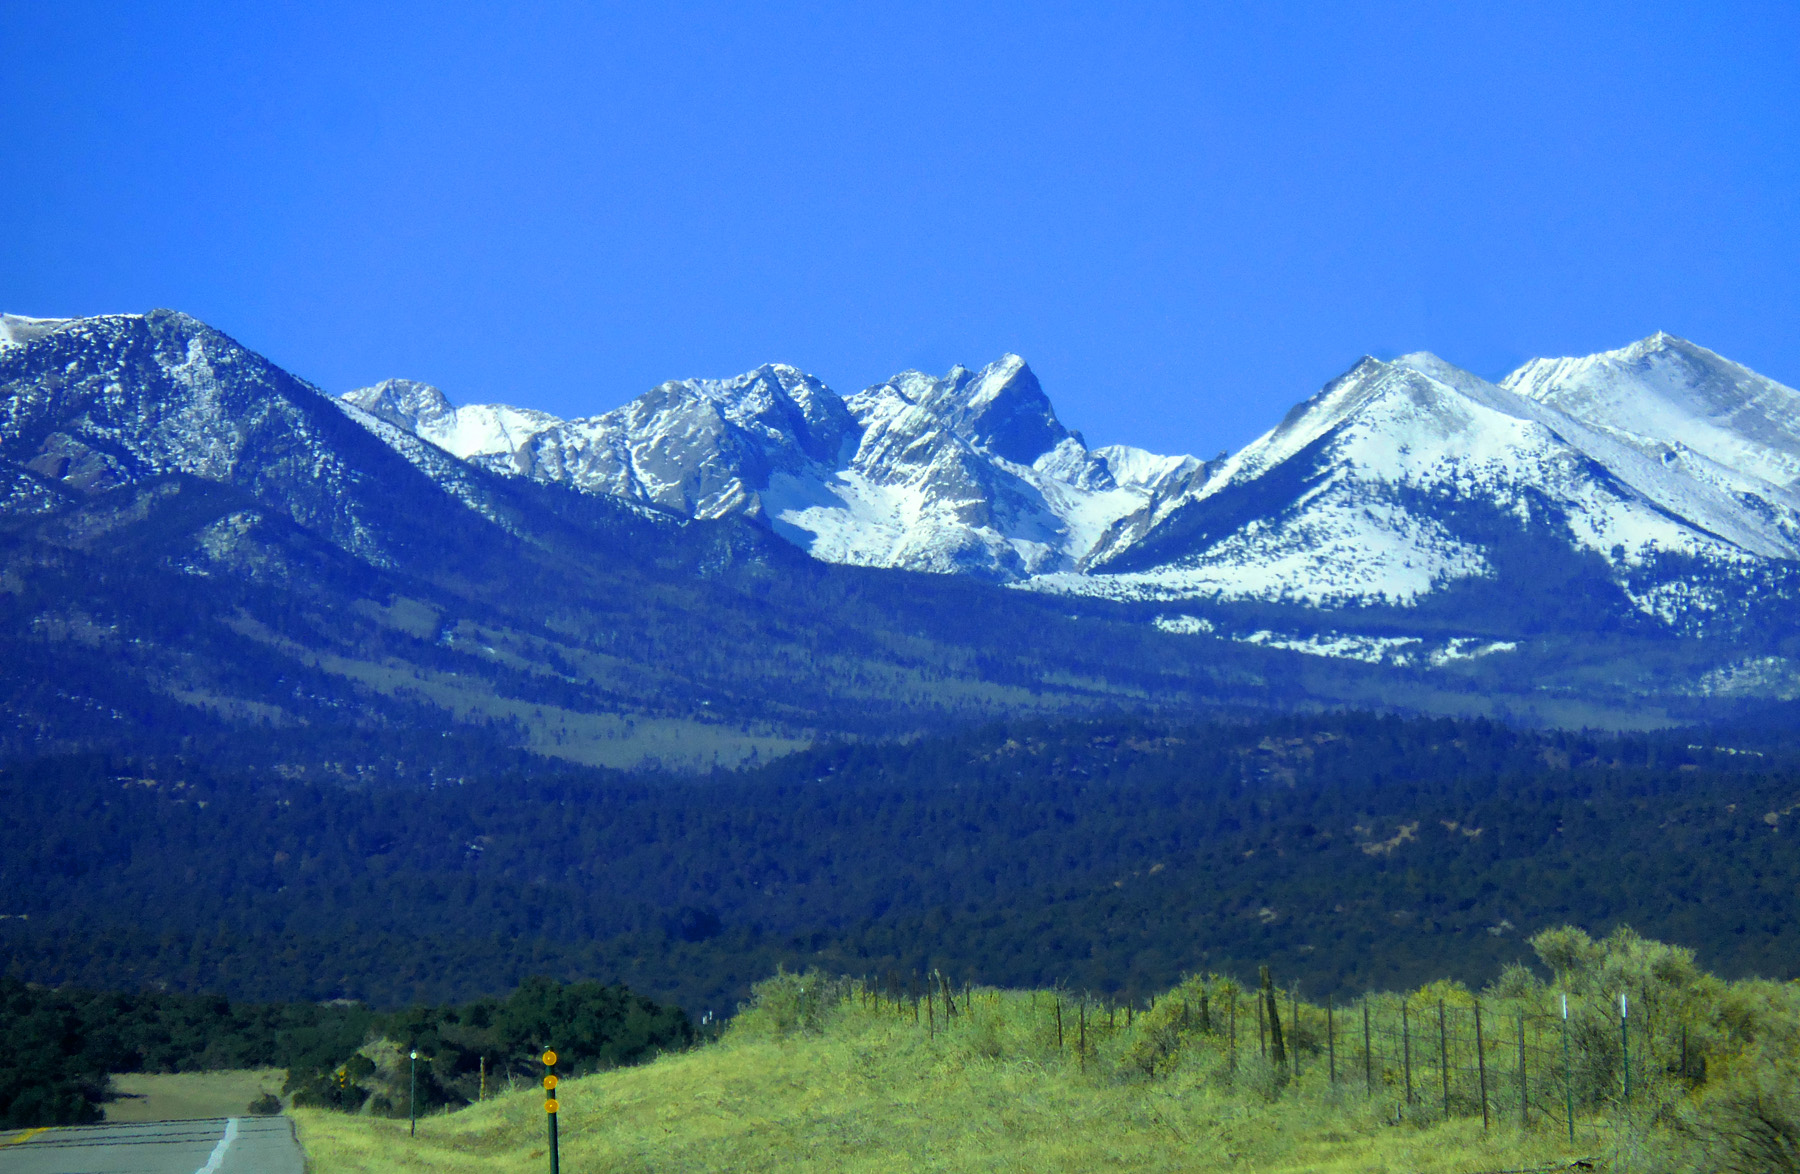 Zapata Ridge